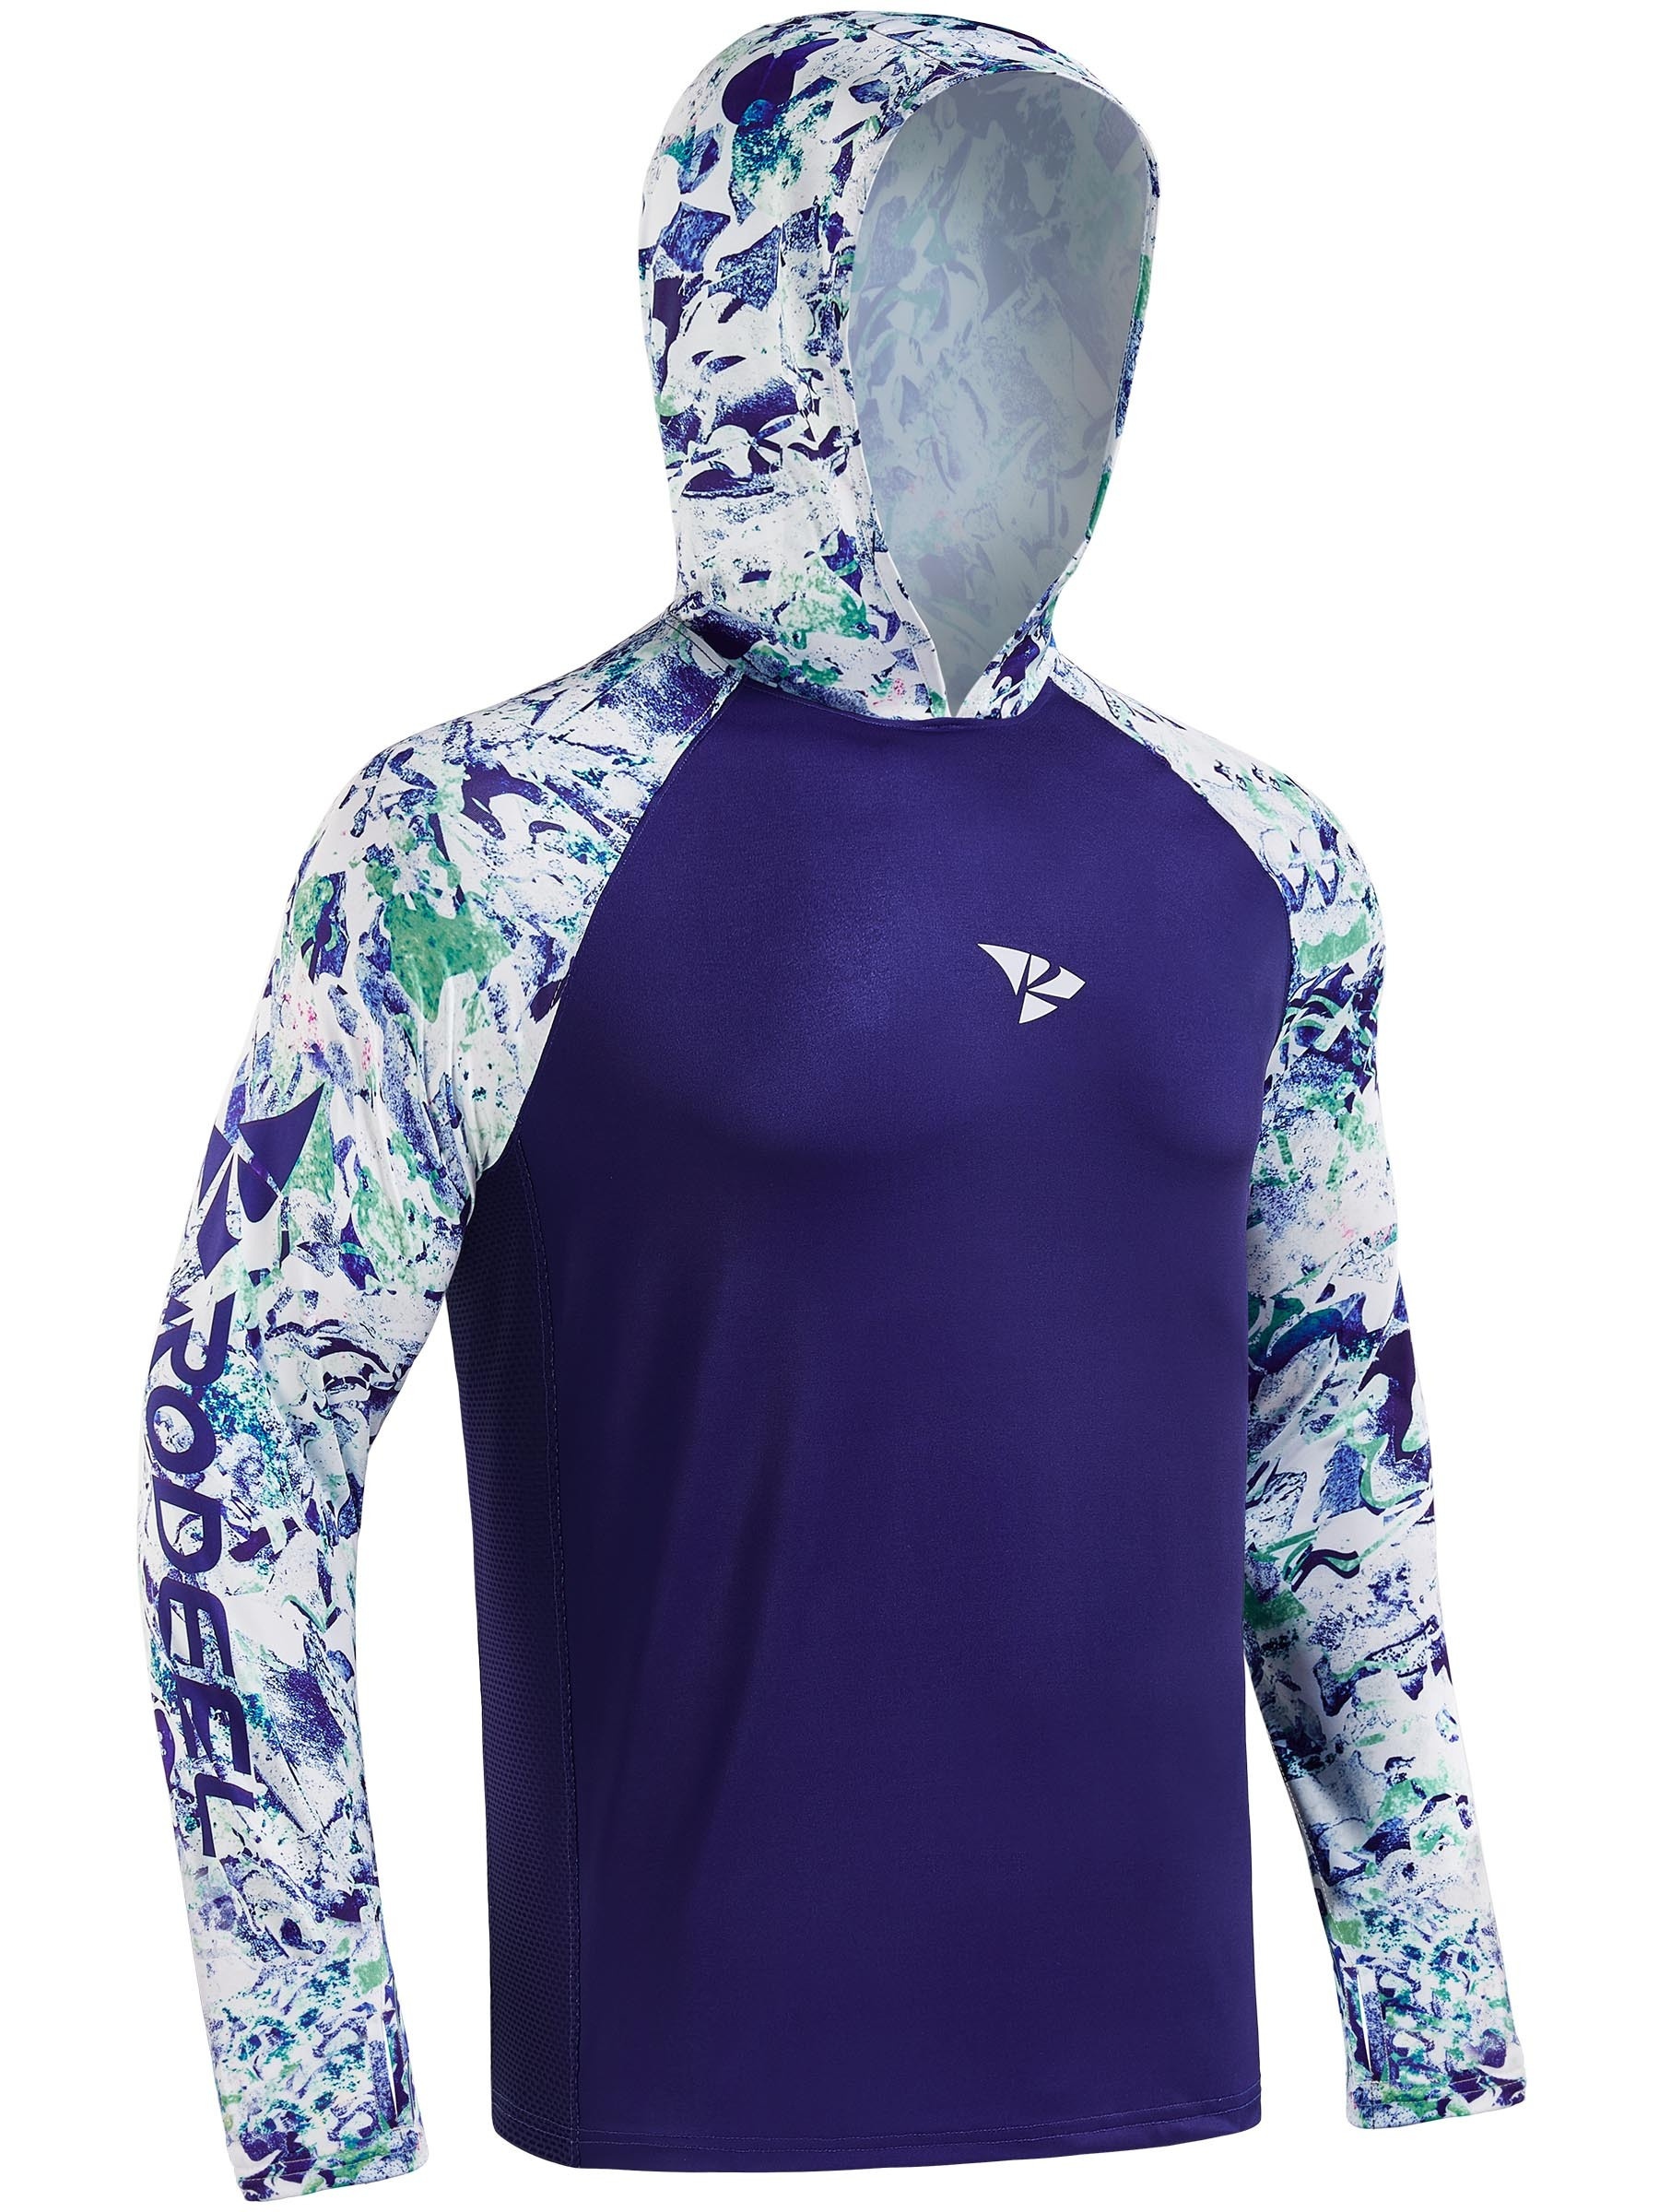 Koofin Gear ~ Shirt Men Sz 2X - Blue Tye Dye Performance Fishing w UV  Protection